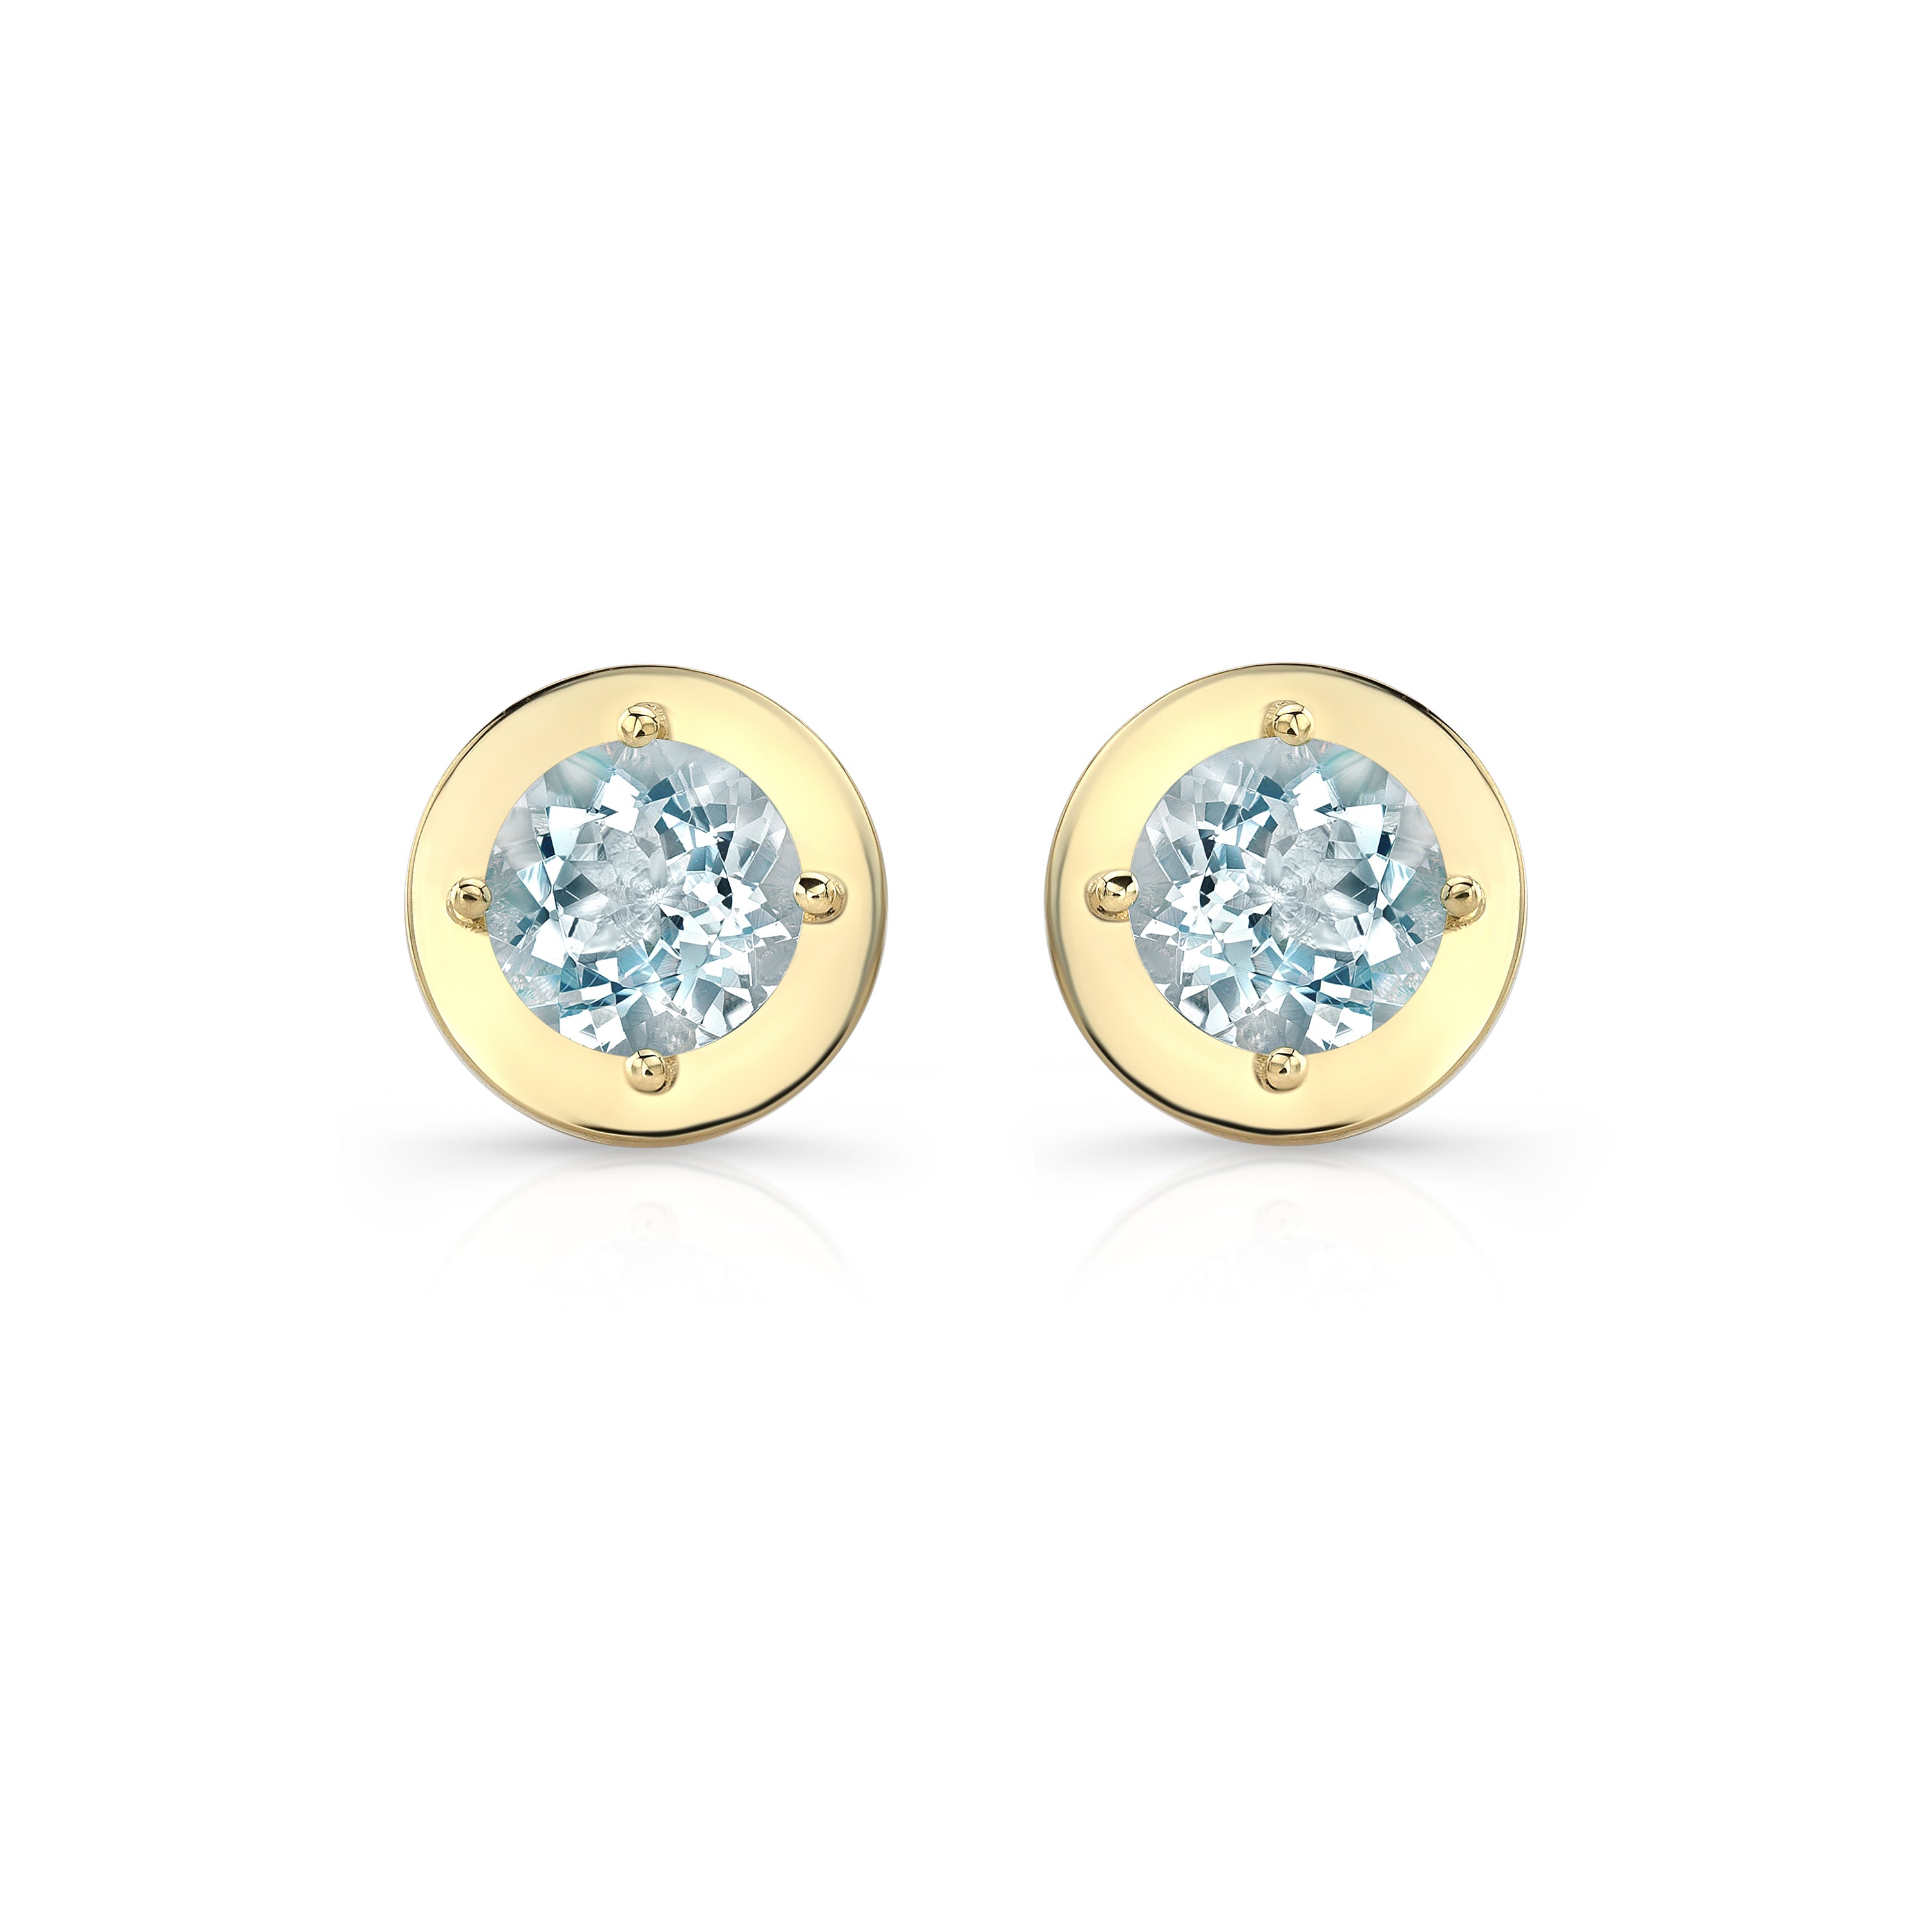 aquamarine stud earrings in 14k solid gold